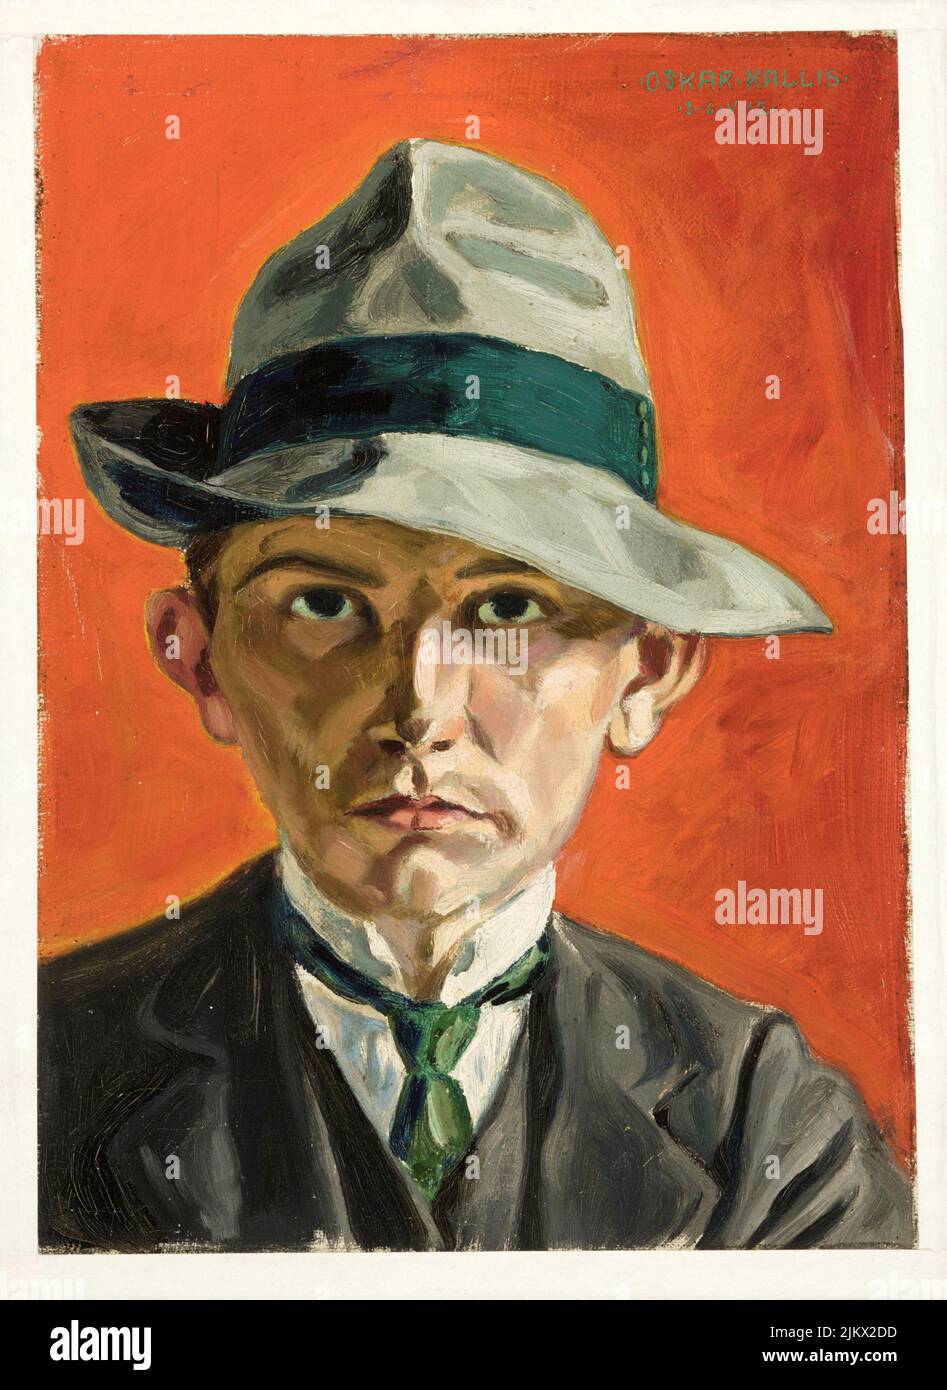 Oskar Kallis - Ritratto di sé - 1912 Foto Stock